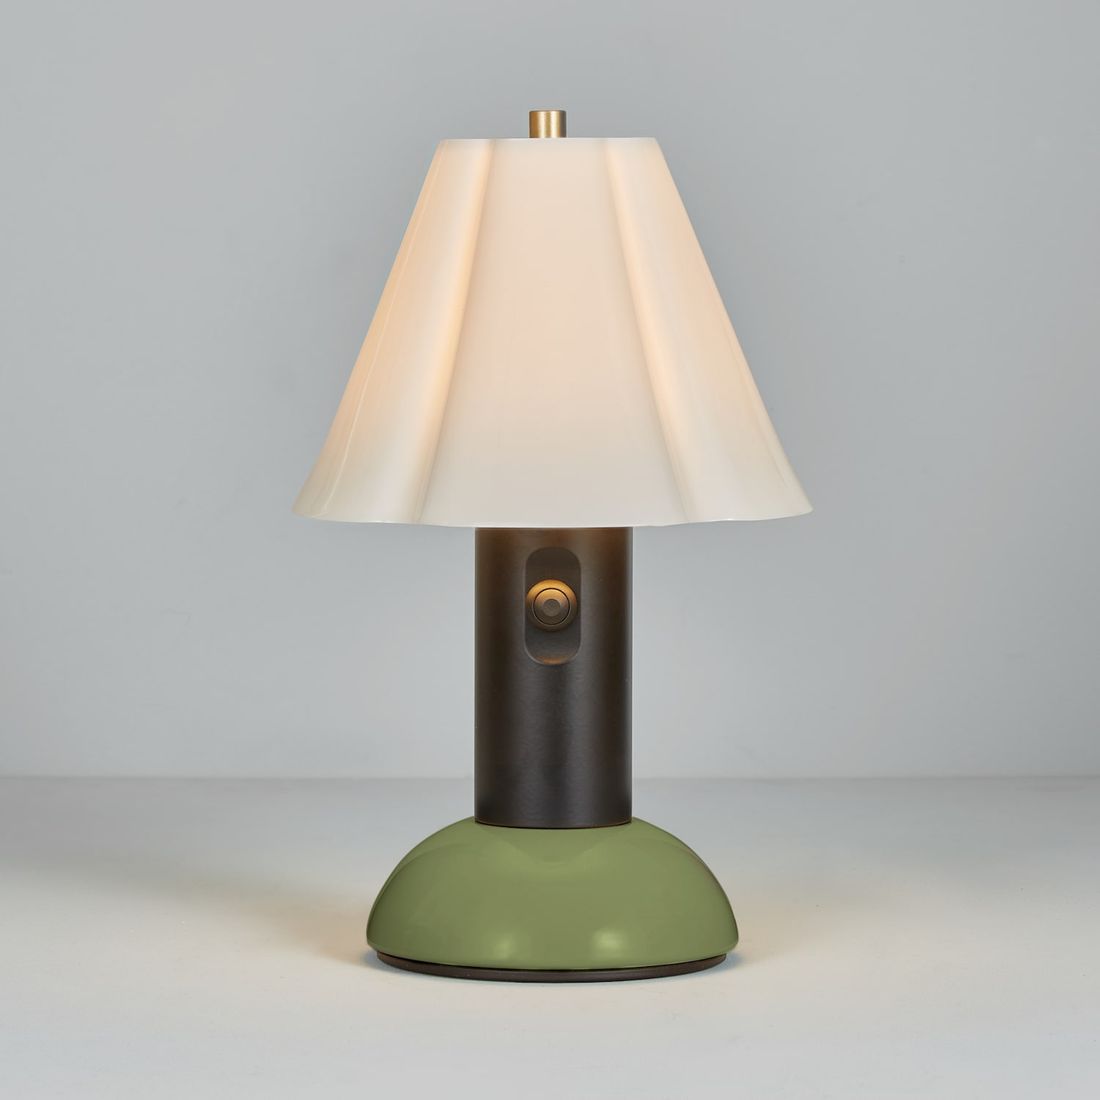 Original BTC - FT704G - Portable Lamp - Blossom - Olive Green